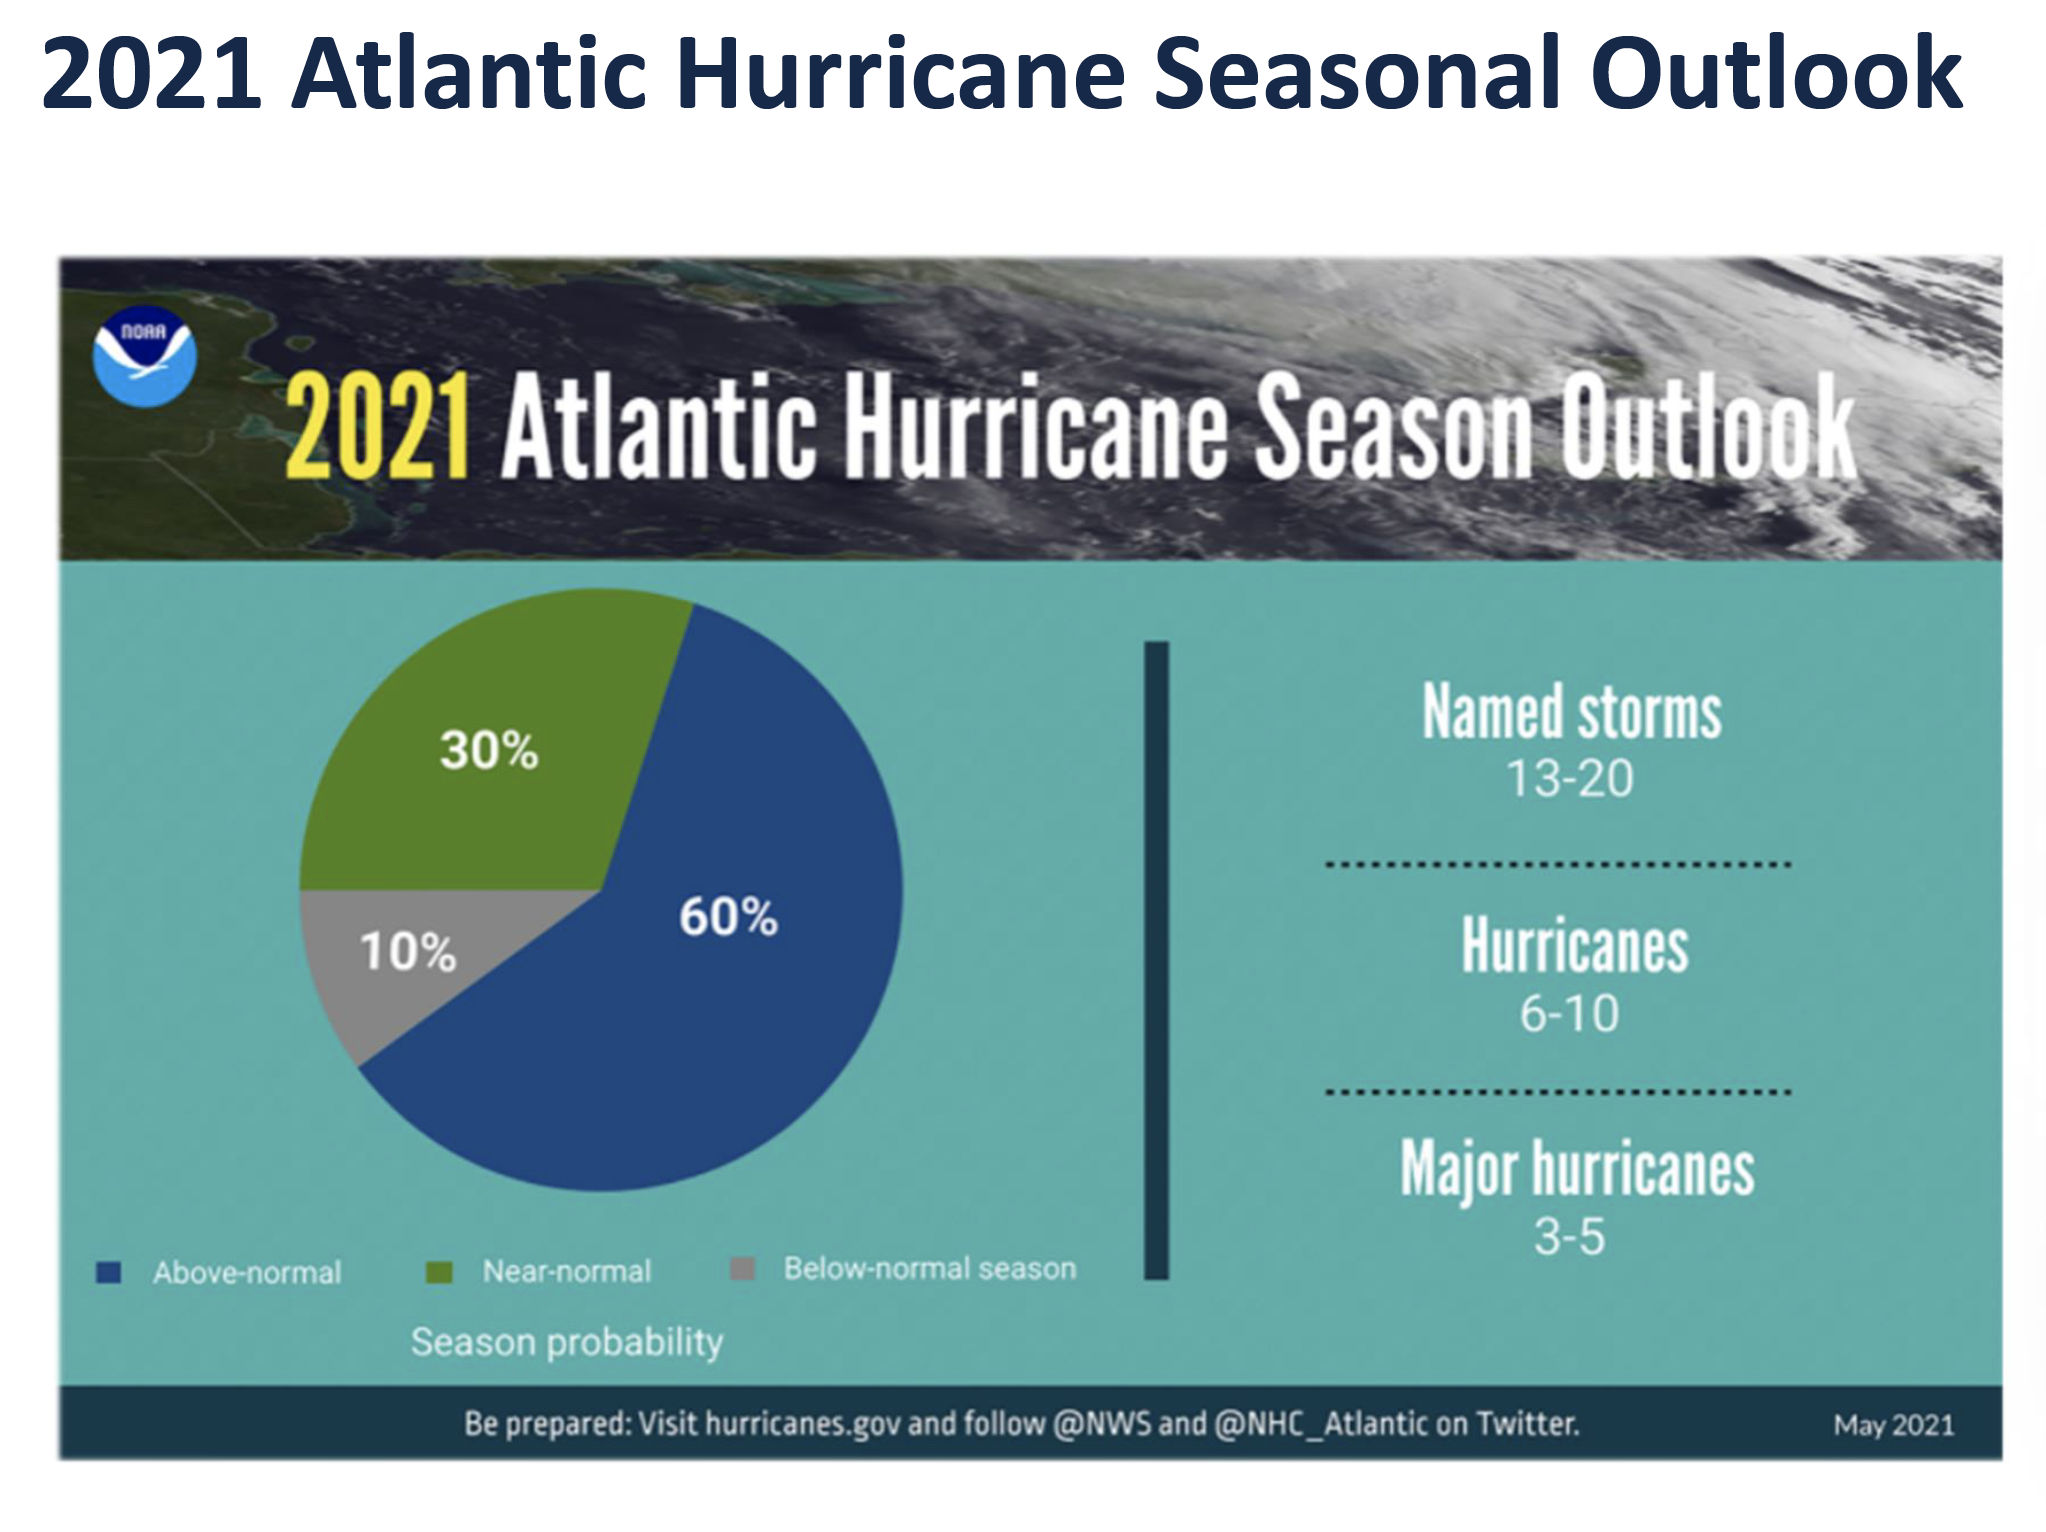 Dawn Wedig includes the NOAA seasonal outlook in her hurricane workshop presentations.